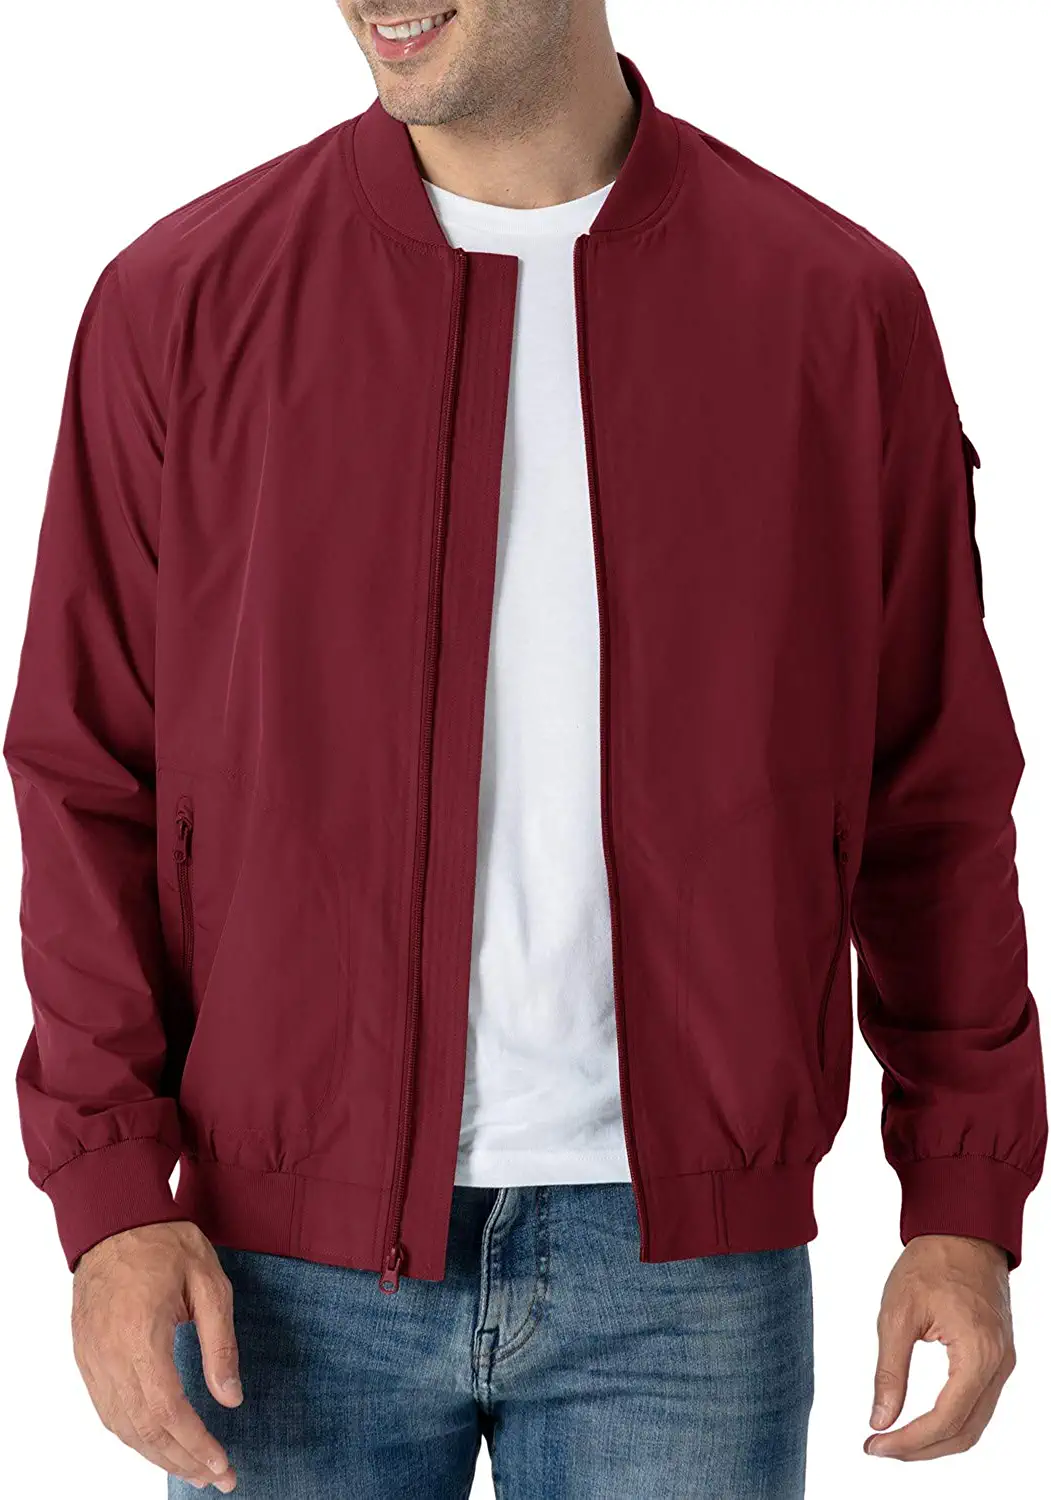 Jackets & Coats, Lightweight Bomber Jacket Red Size L